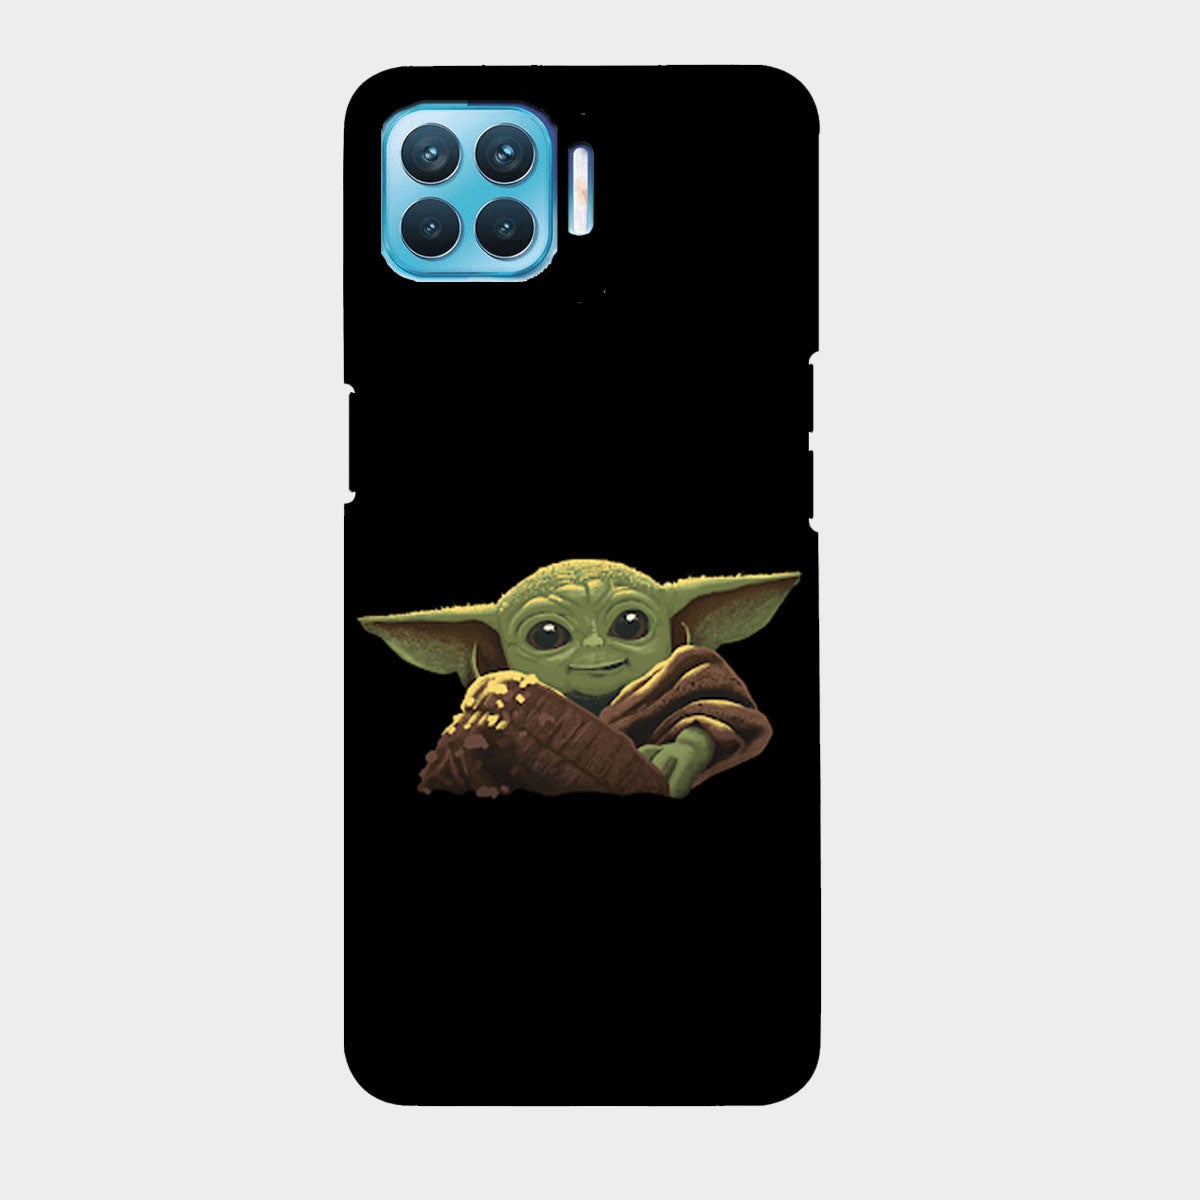 Baby Yoda - The Mandalorian - Mobile Phone Cover - Hard Case